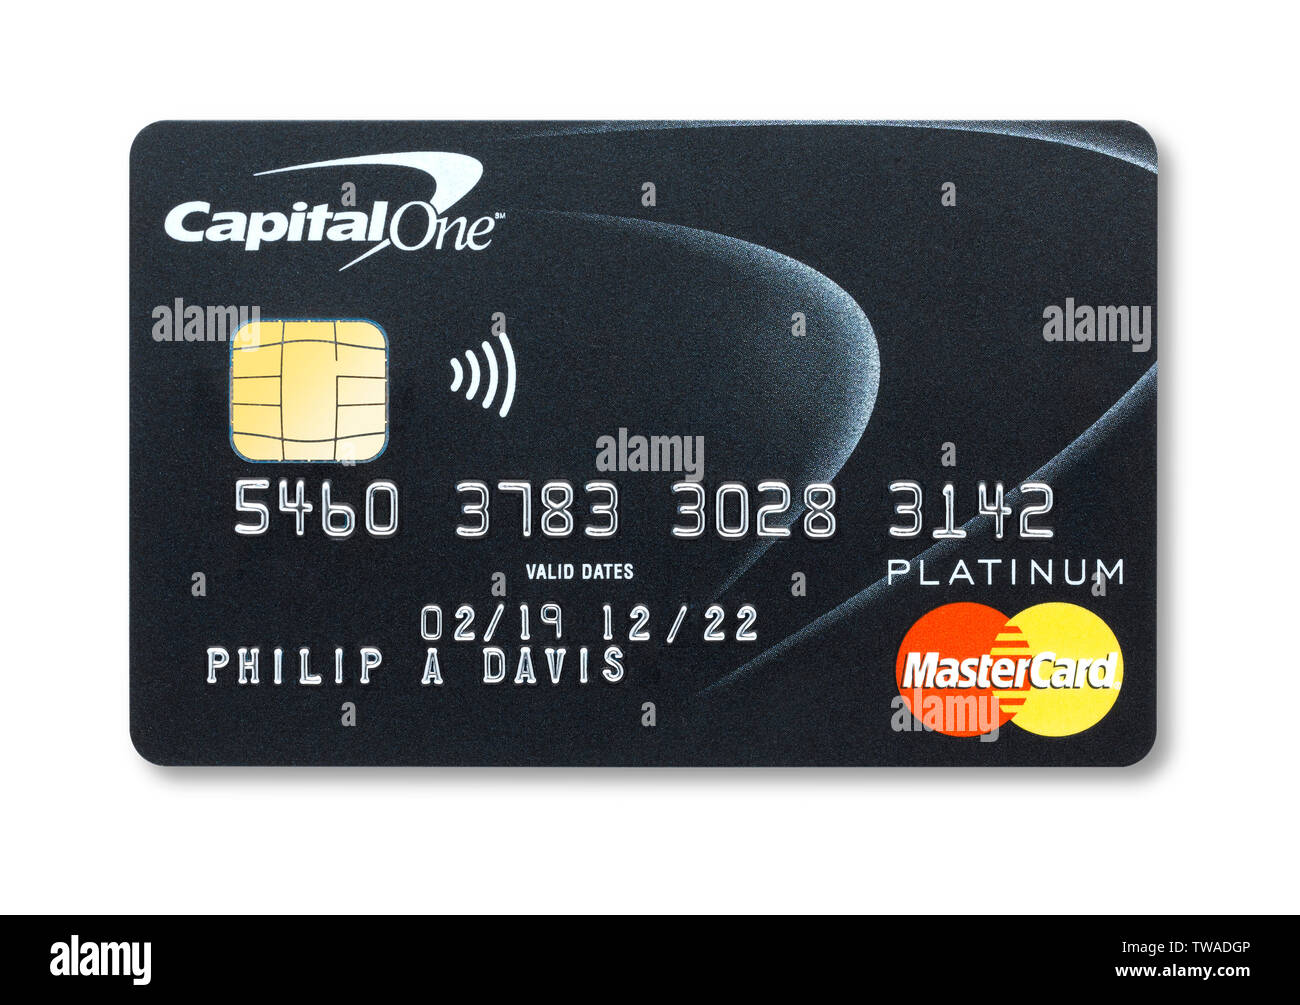 Capital One tarjeta de crédito Mastercard Foto de stock